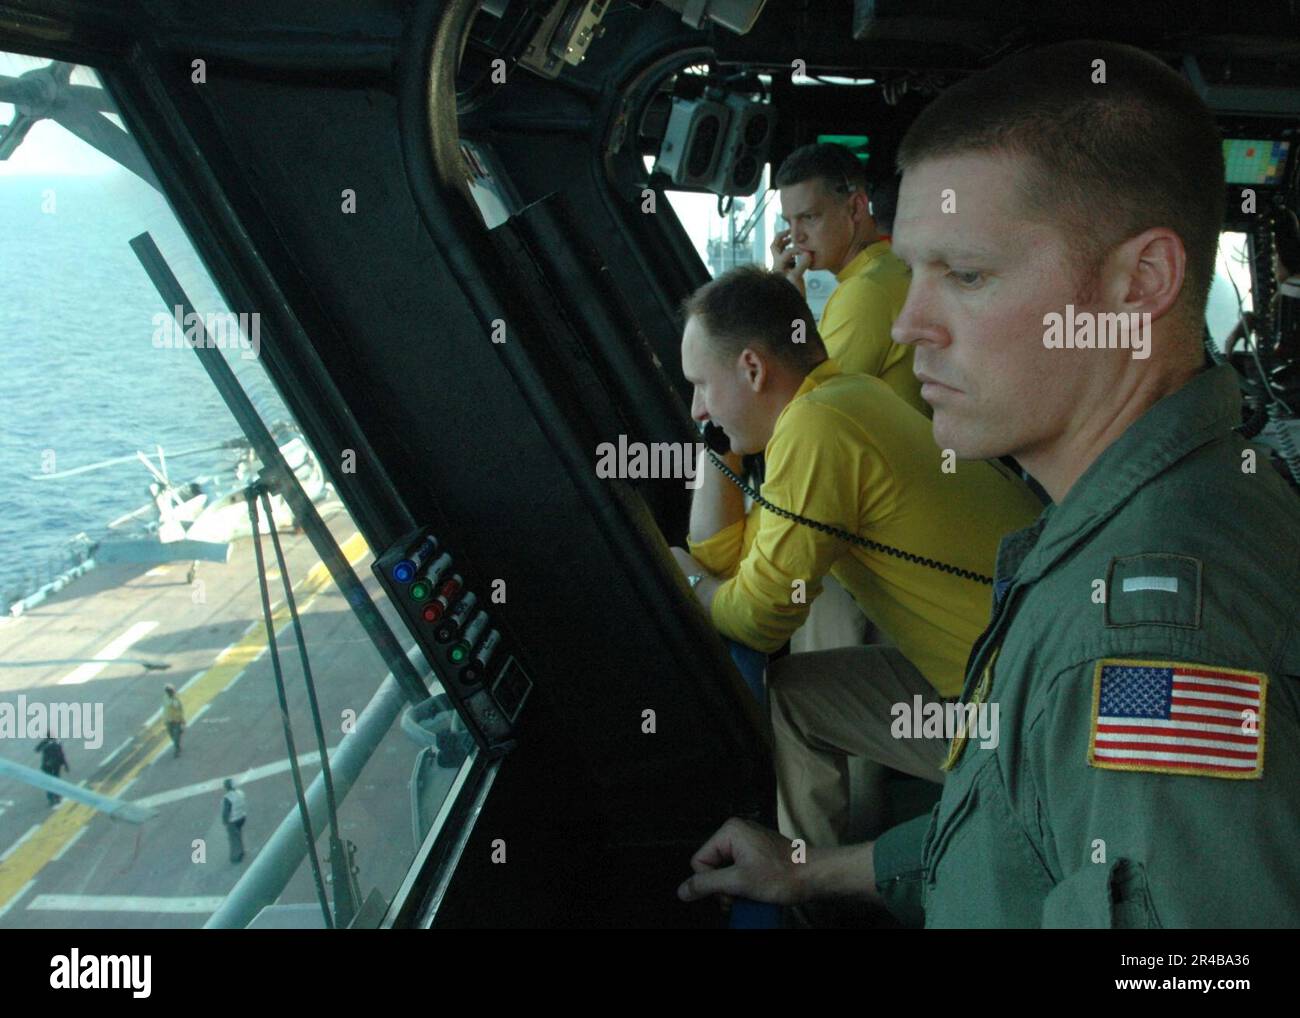 US Navy  Lt.j.g. oversees flight deck operations from Primary Flight Control aboard the amphibious assault ship USS Iwo Jima (LHD 7). Stock Photo